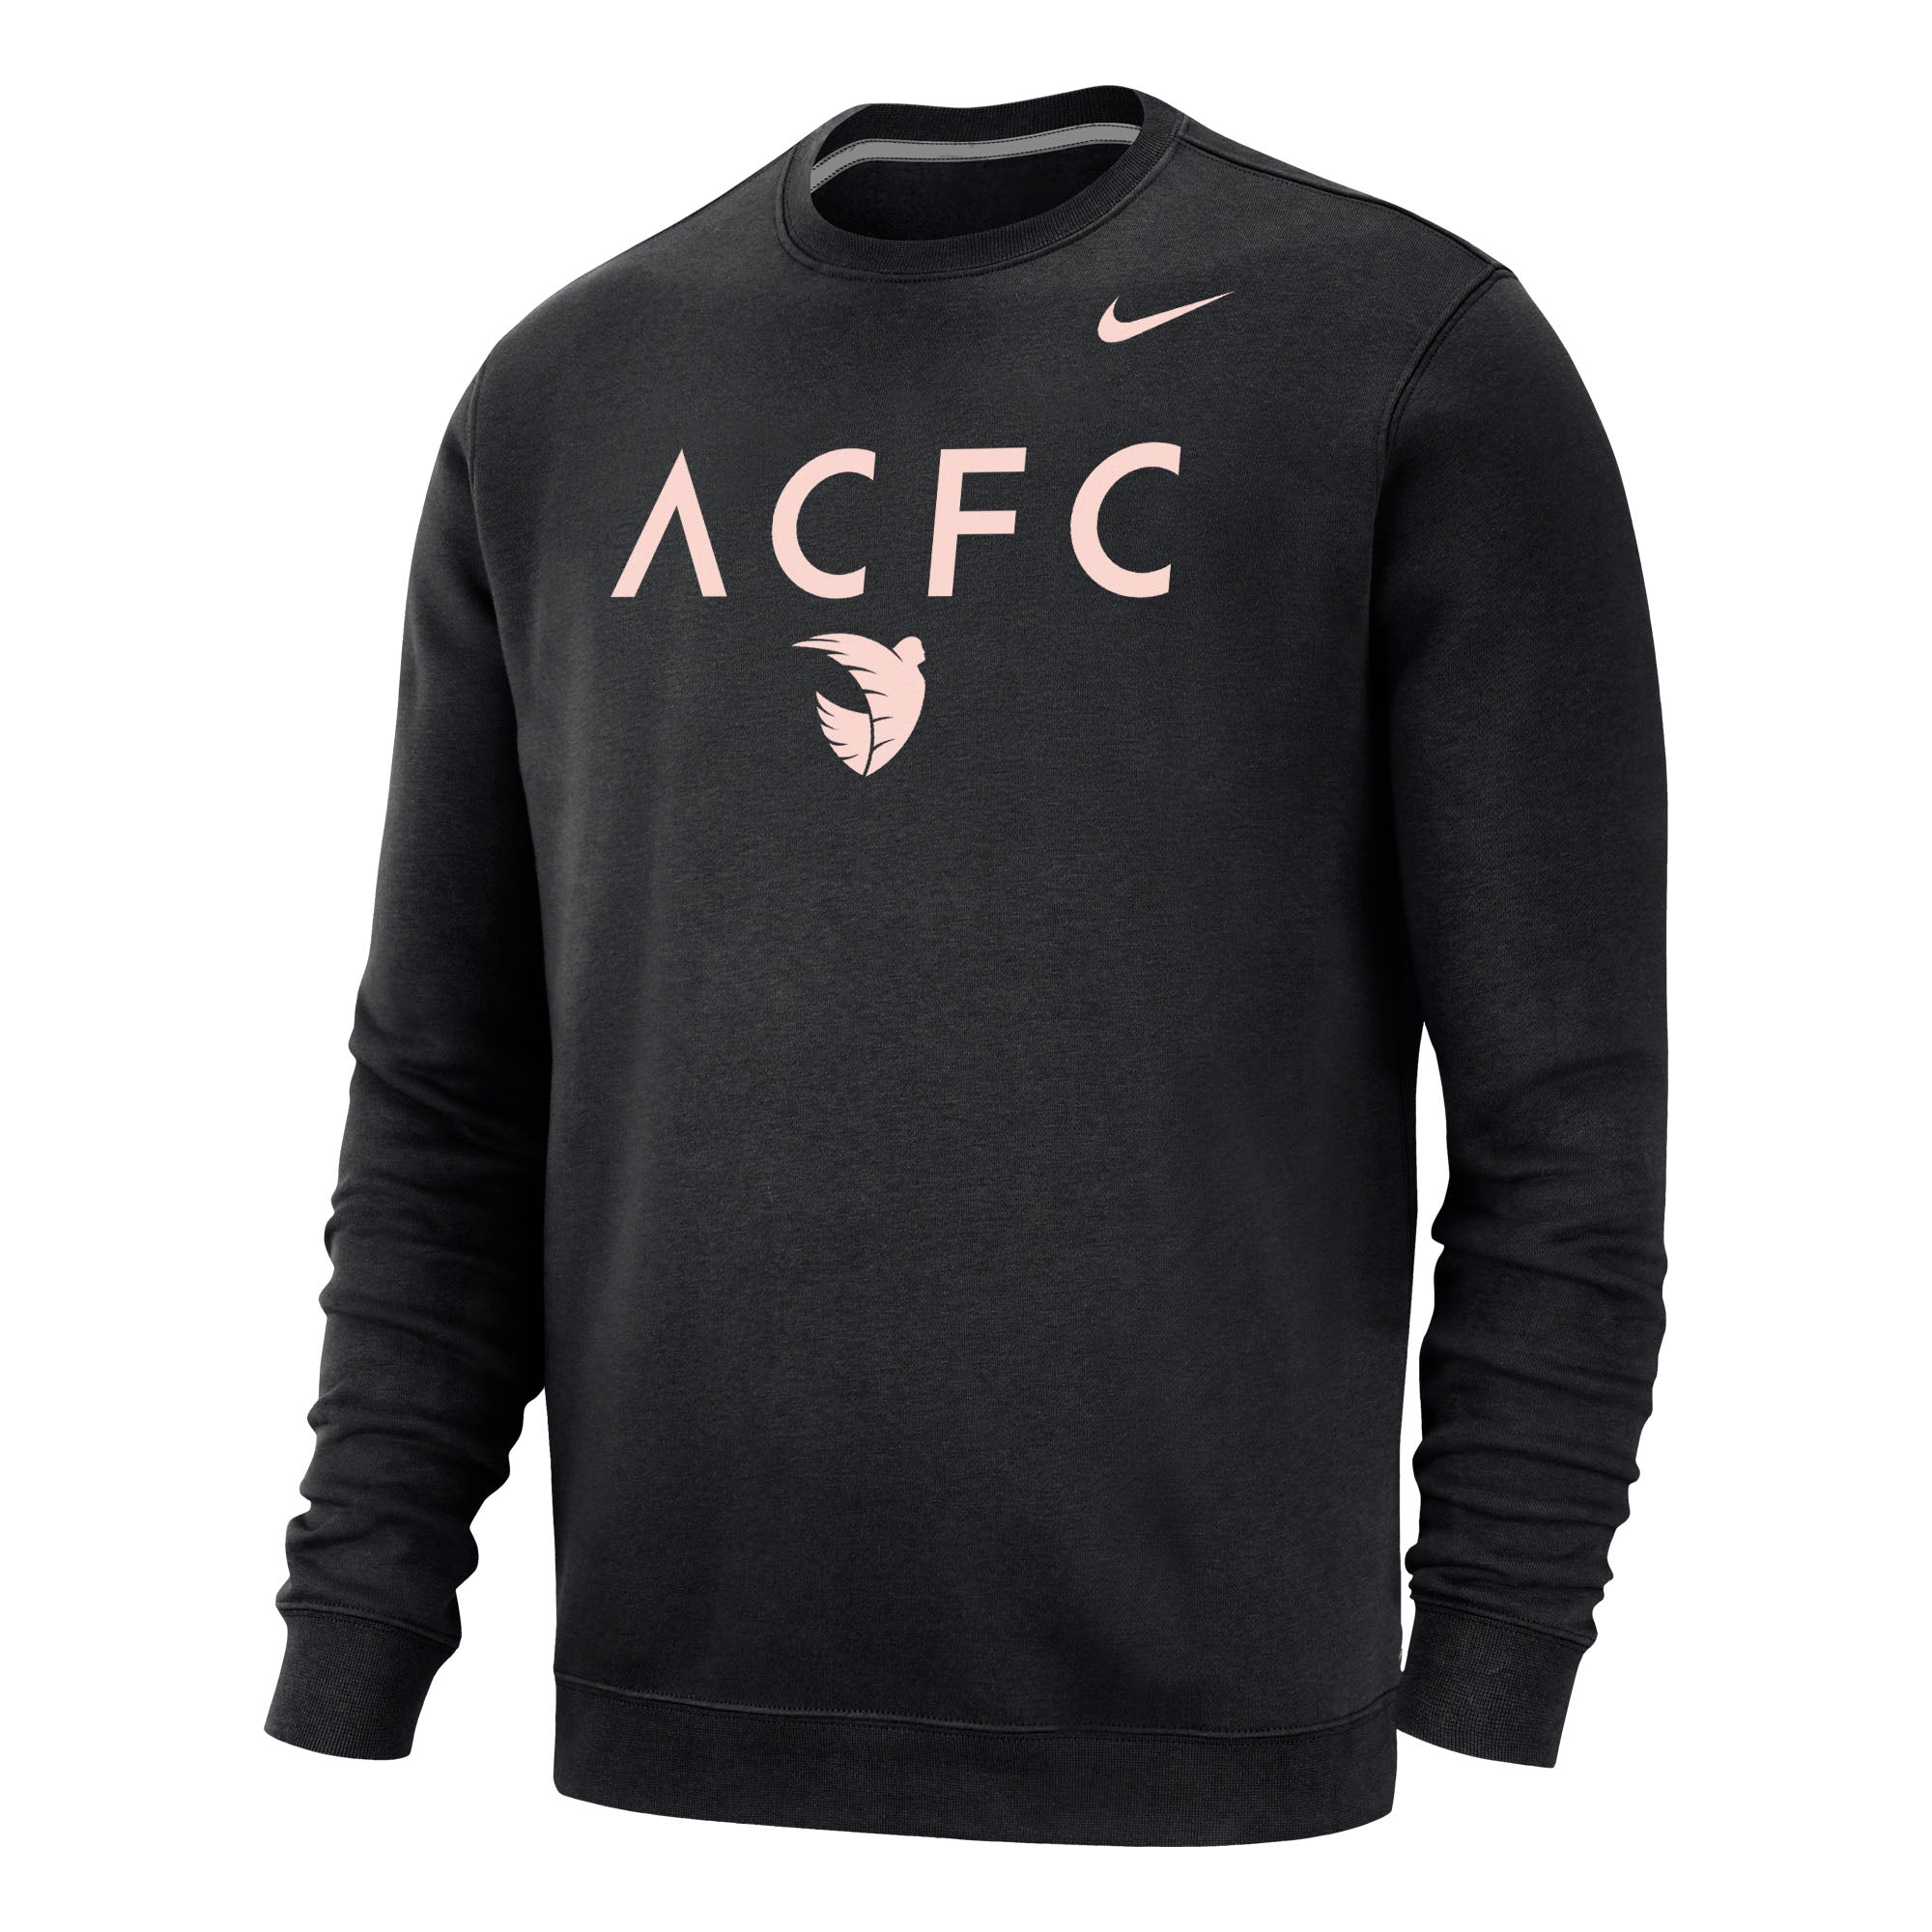 ACFC Nike Sol Rosa Club Fleece Crew Unisex Adulto